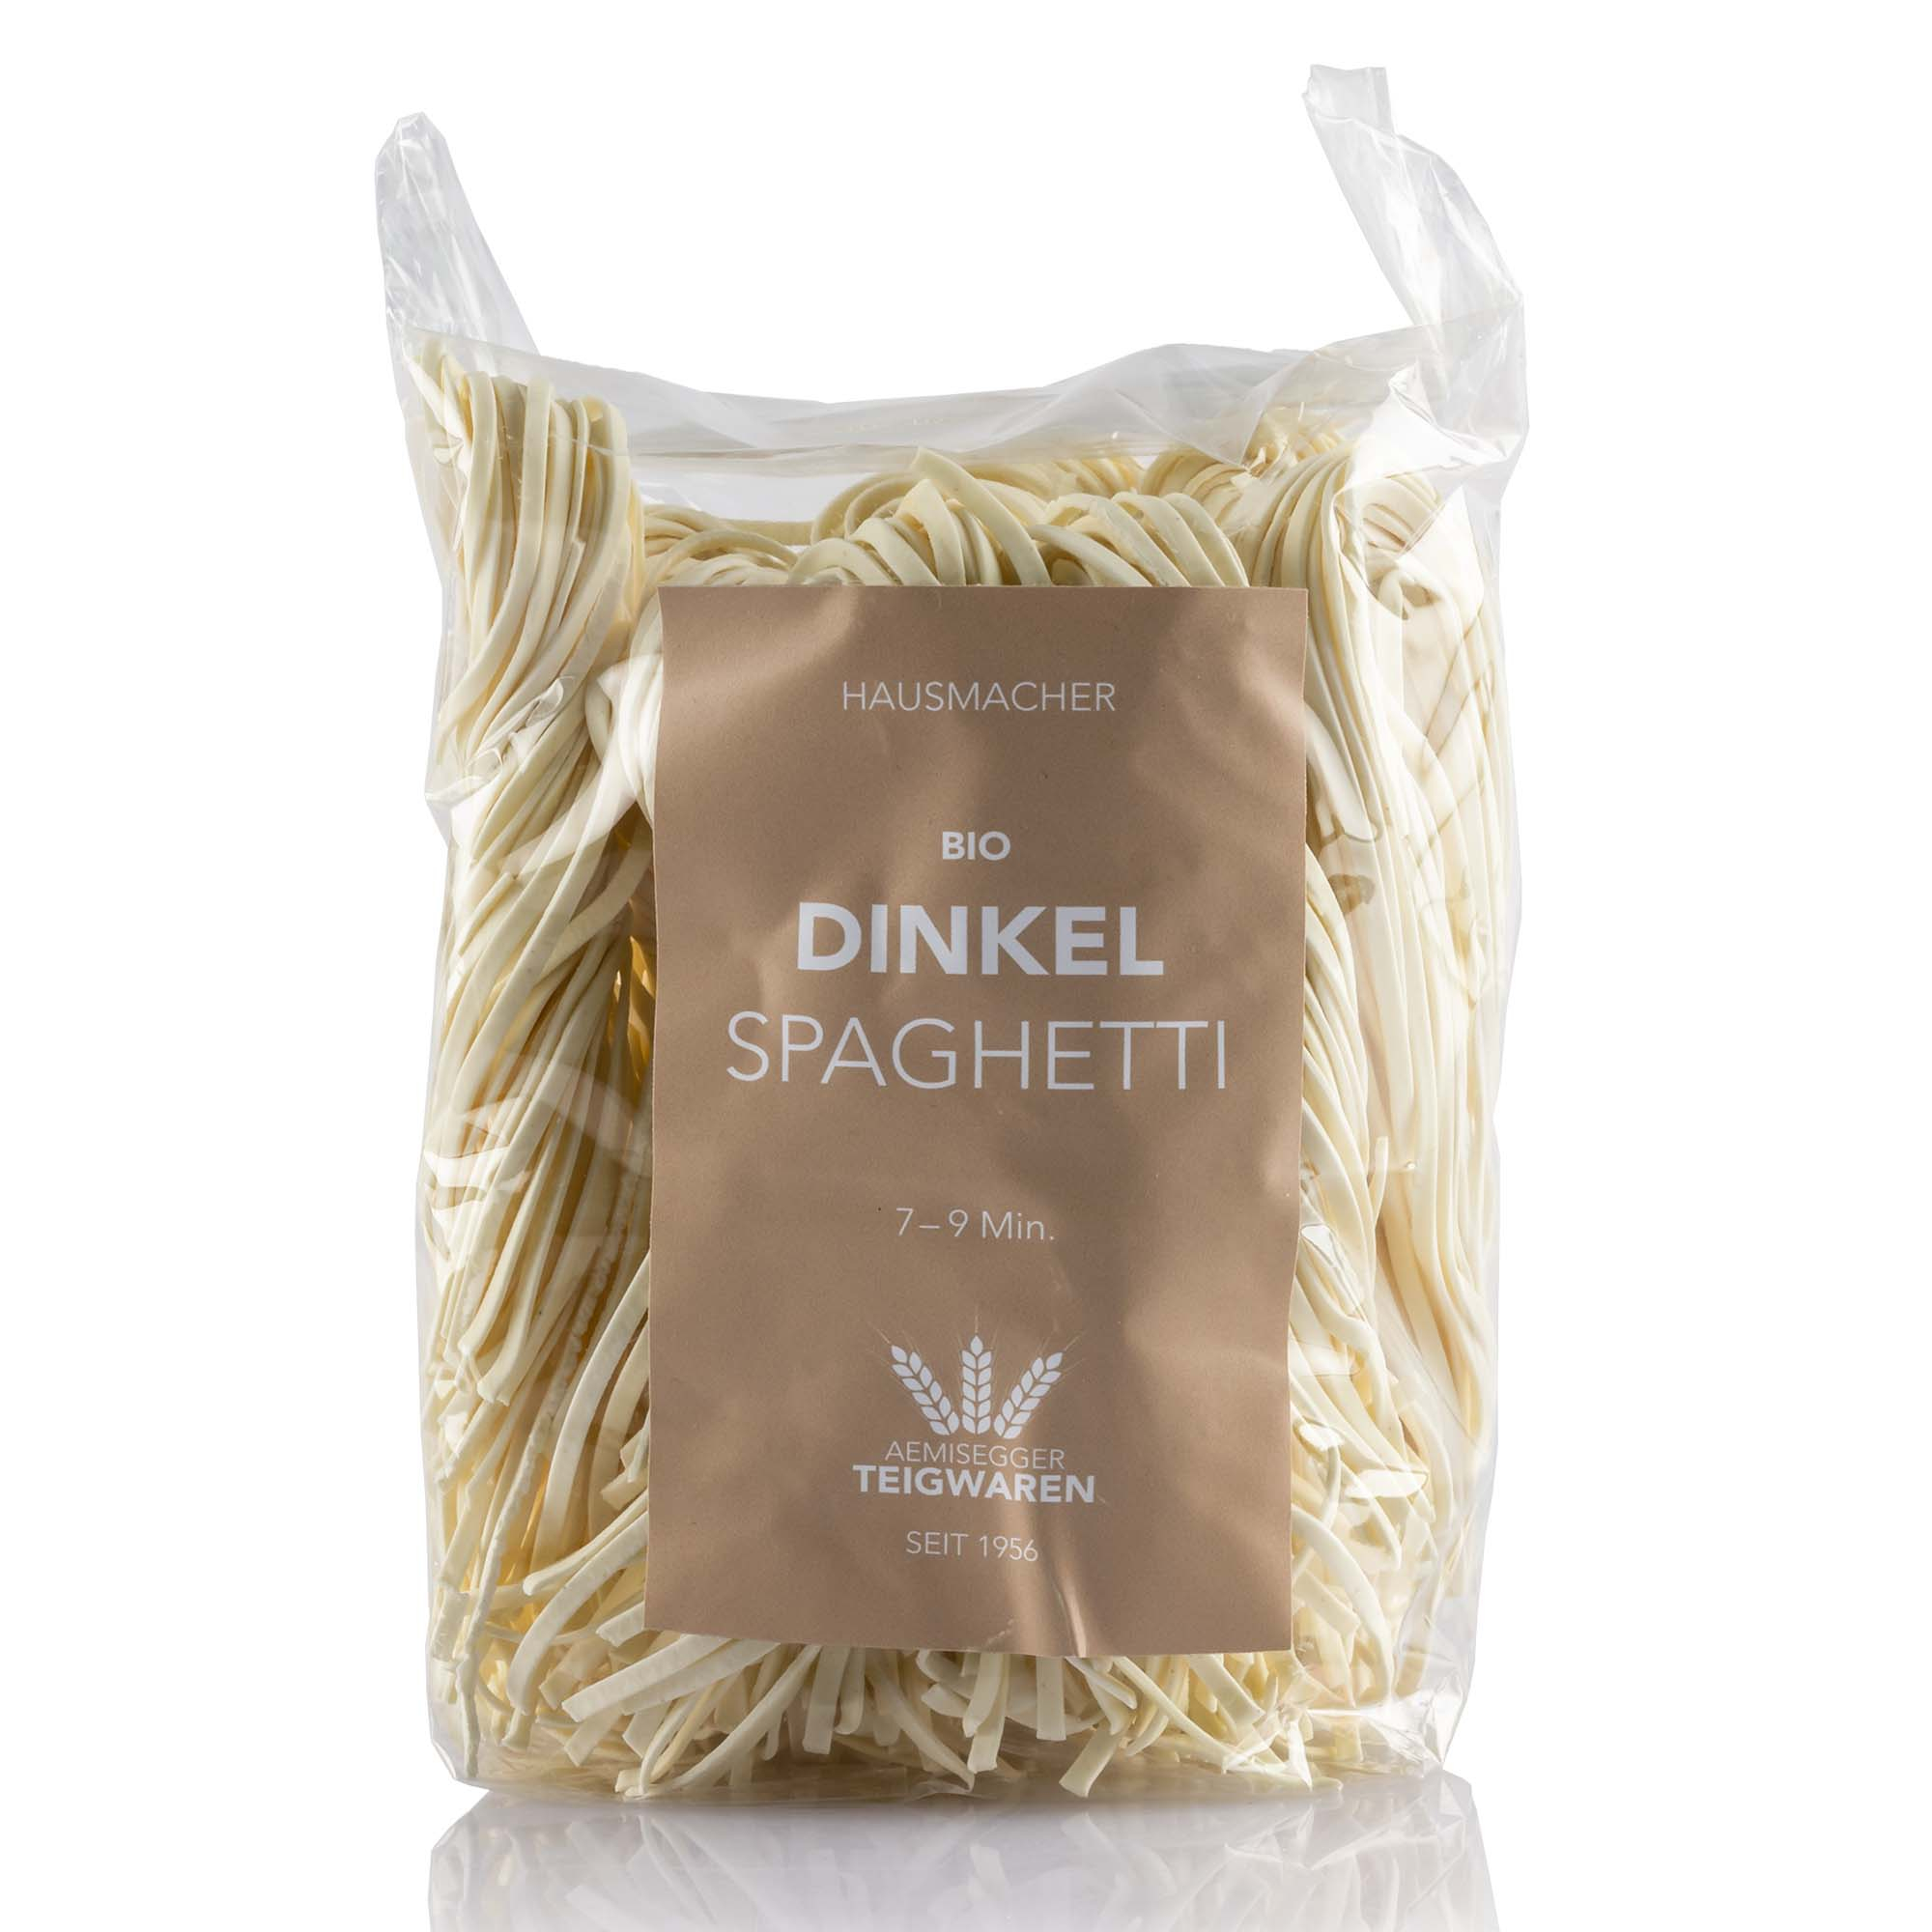 Bio Dinkel Spaghetti, 300g